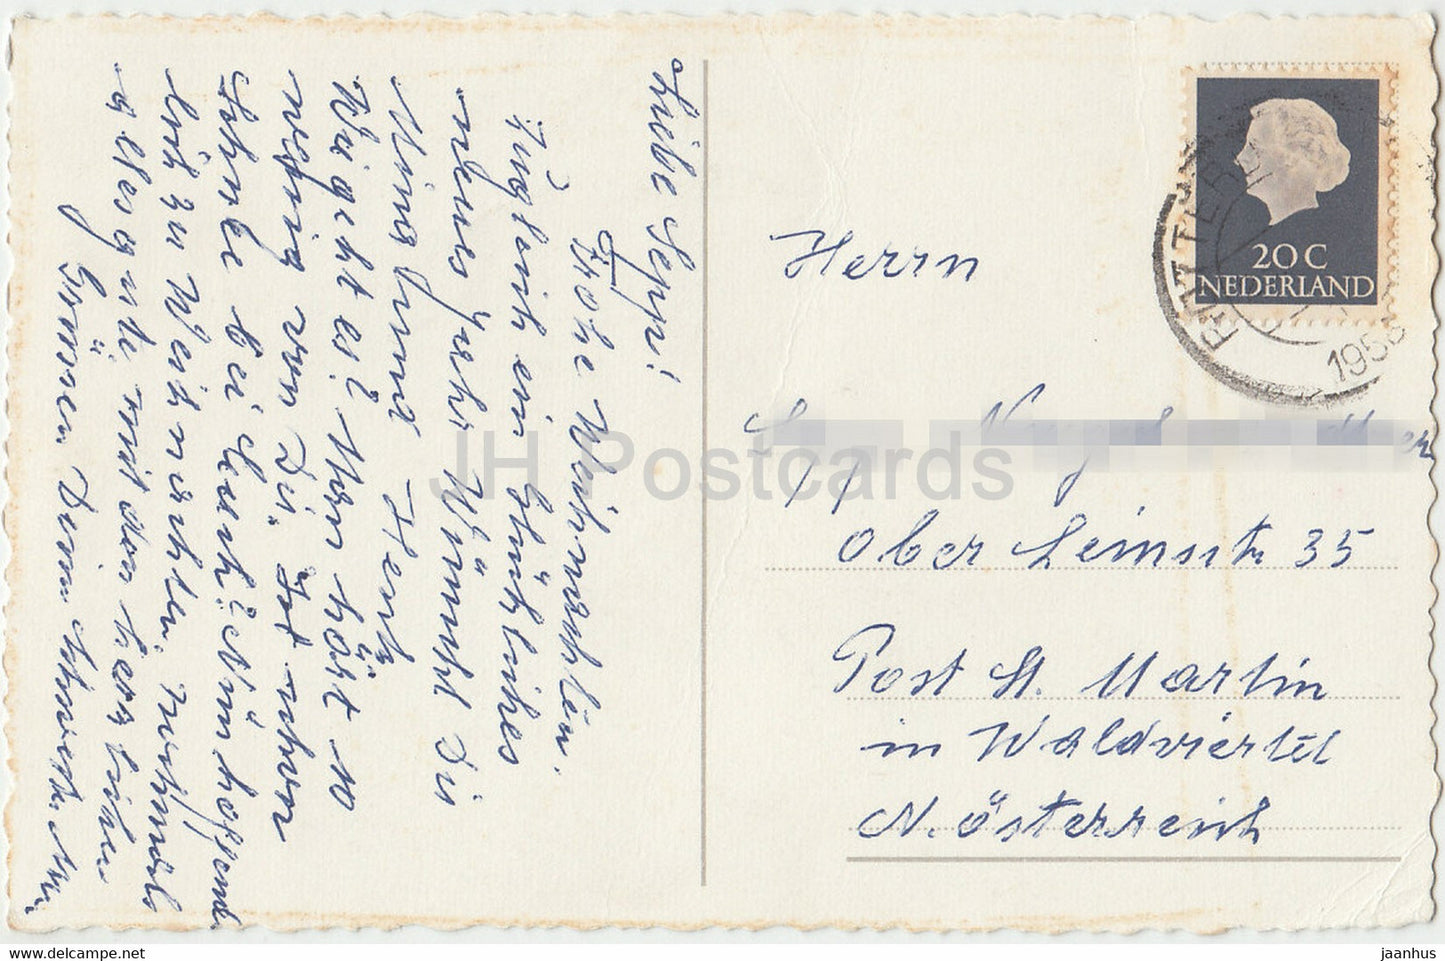 Christmas Greeting Card - Gelukkig Kerstfeest - boy and girl - sledge - old postcard - 1950s - Netherlands - used